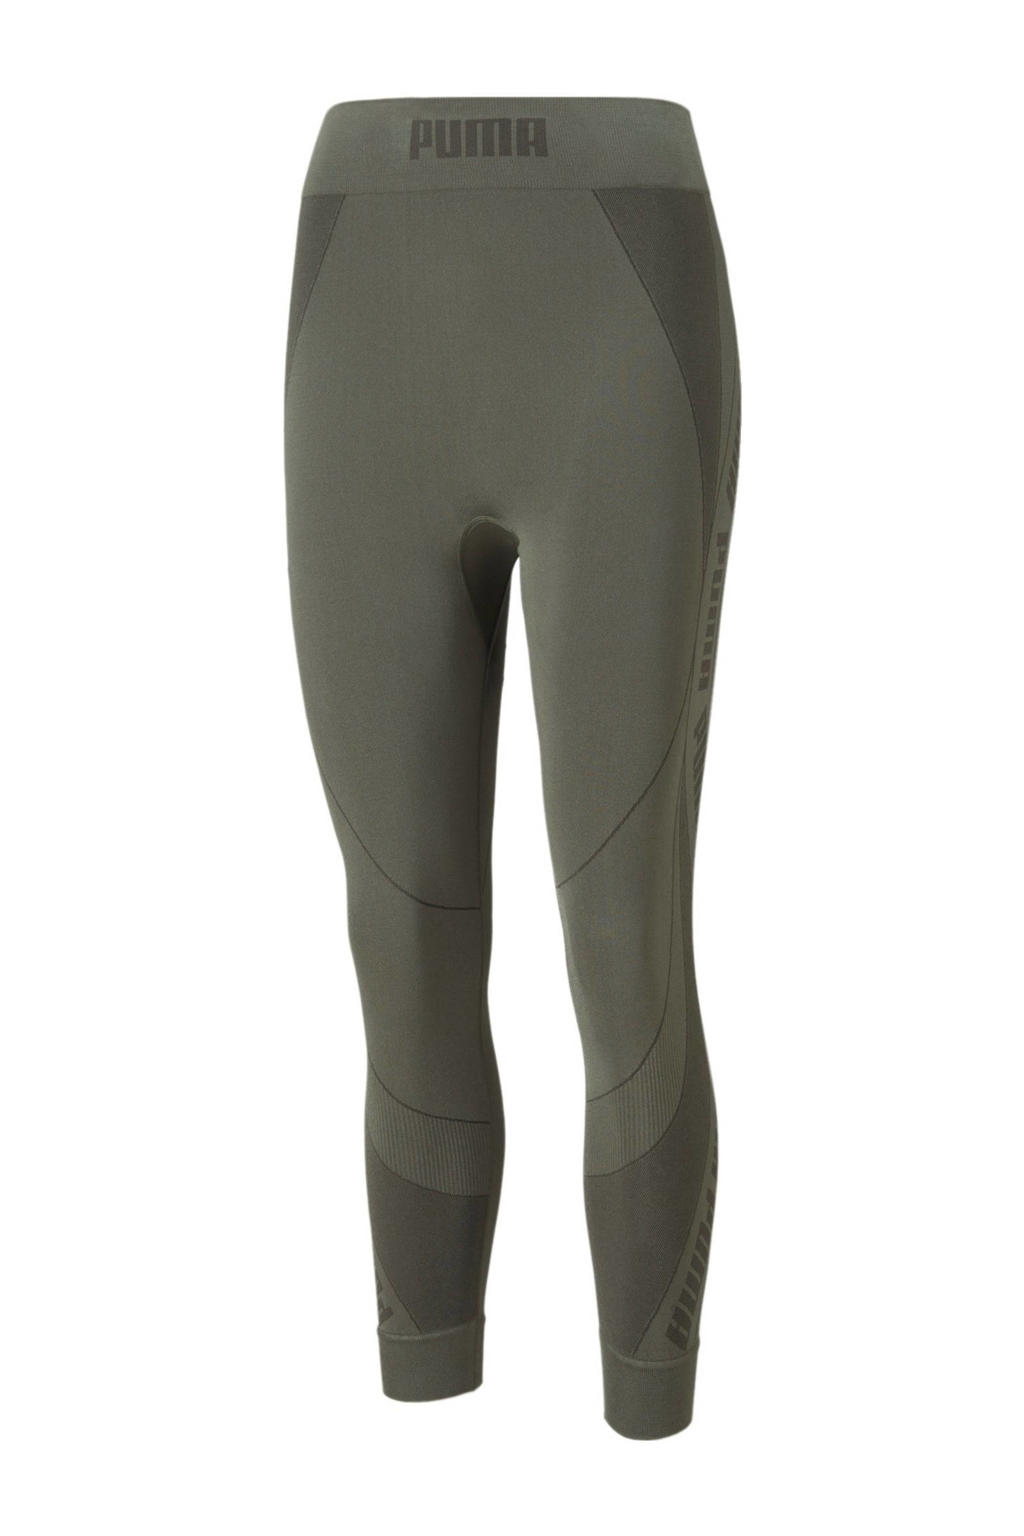 Groene dames Puma 7 8 legging van polyamide met slim fit, high waist en elastische tailleband